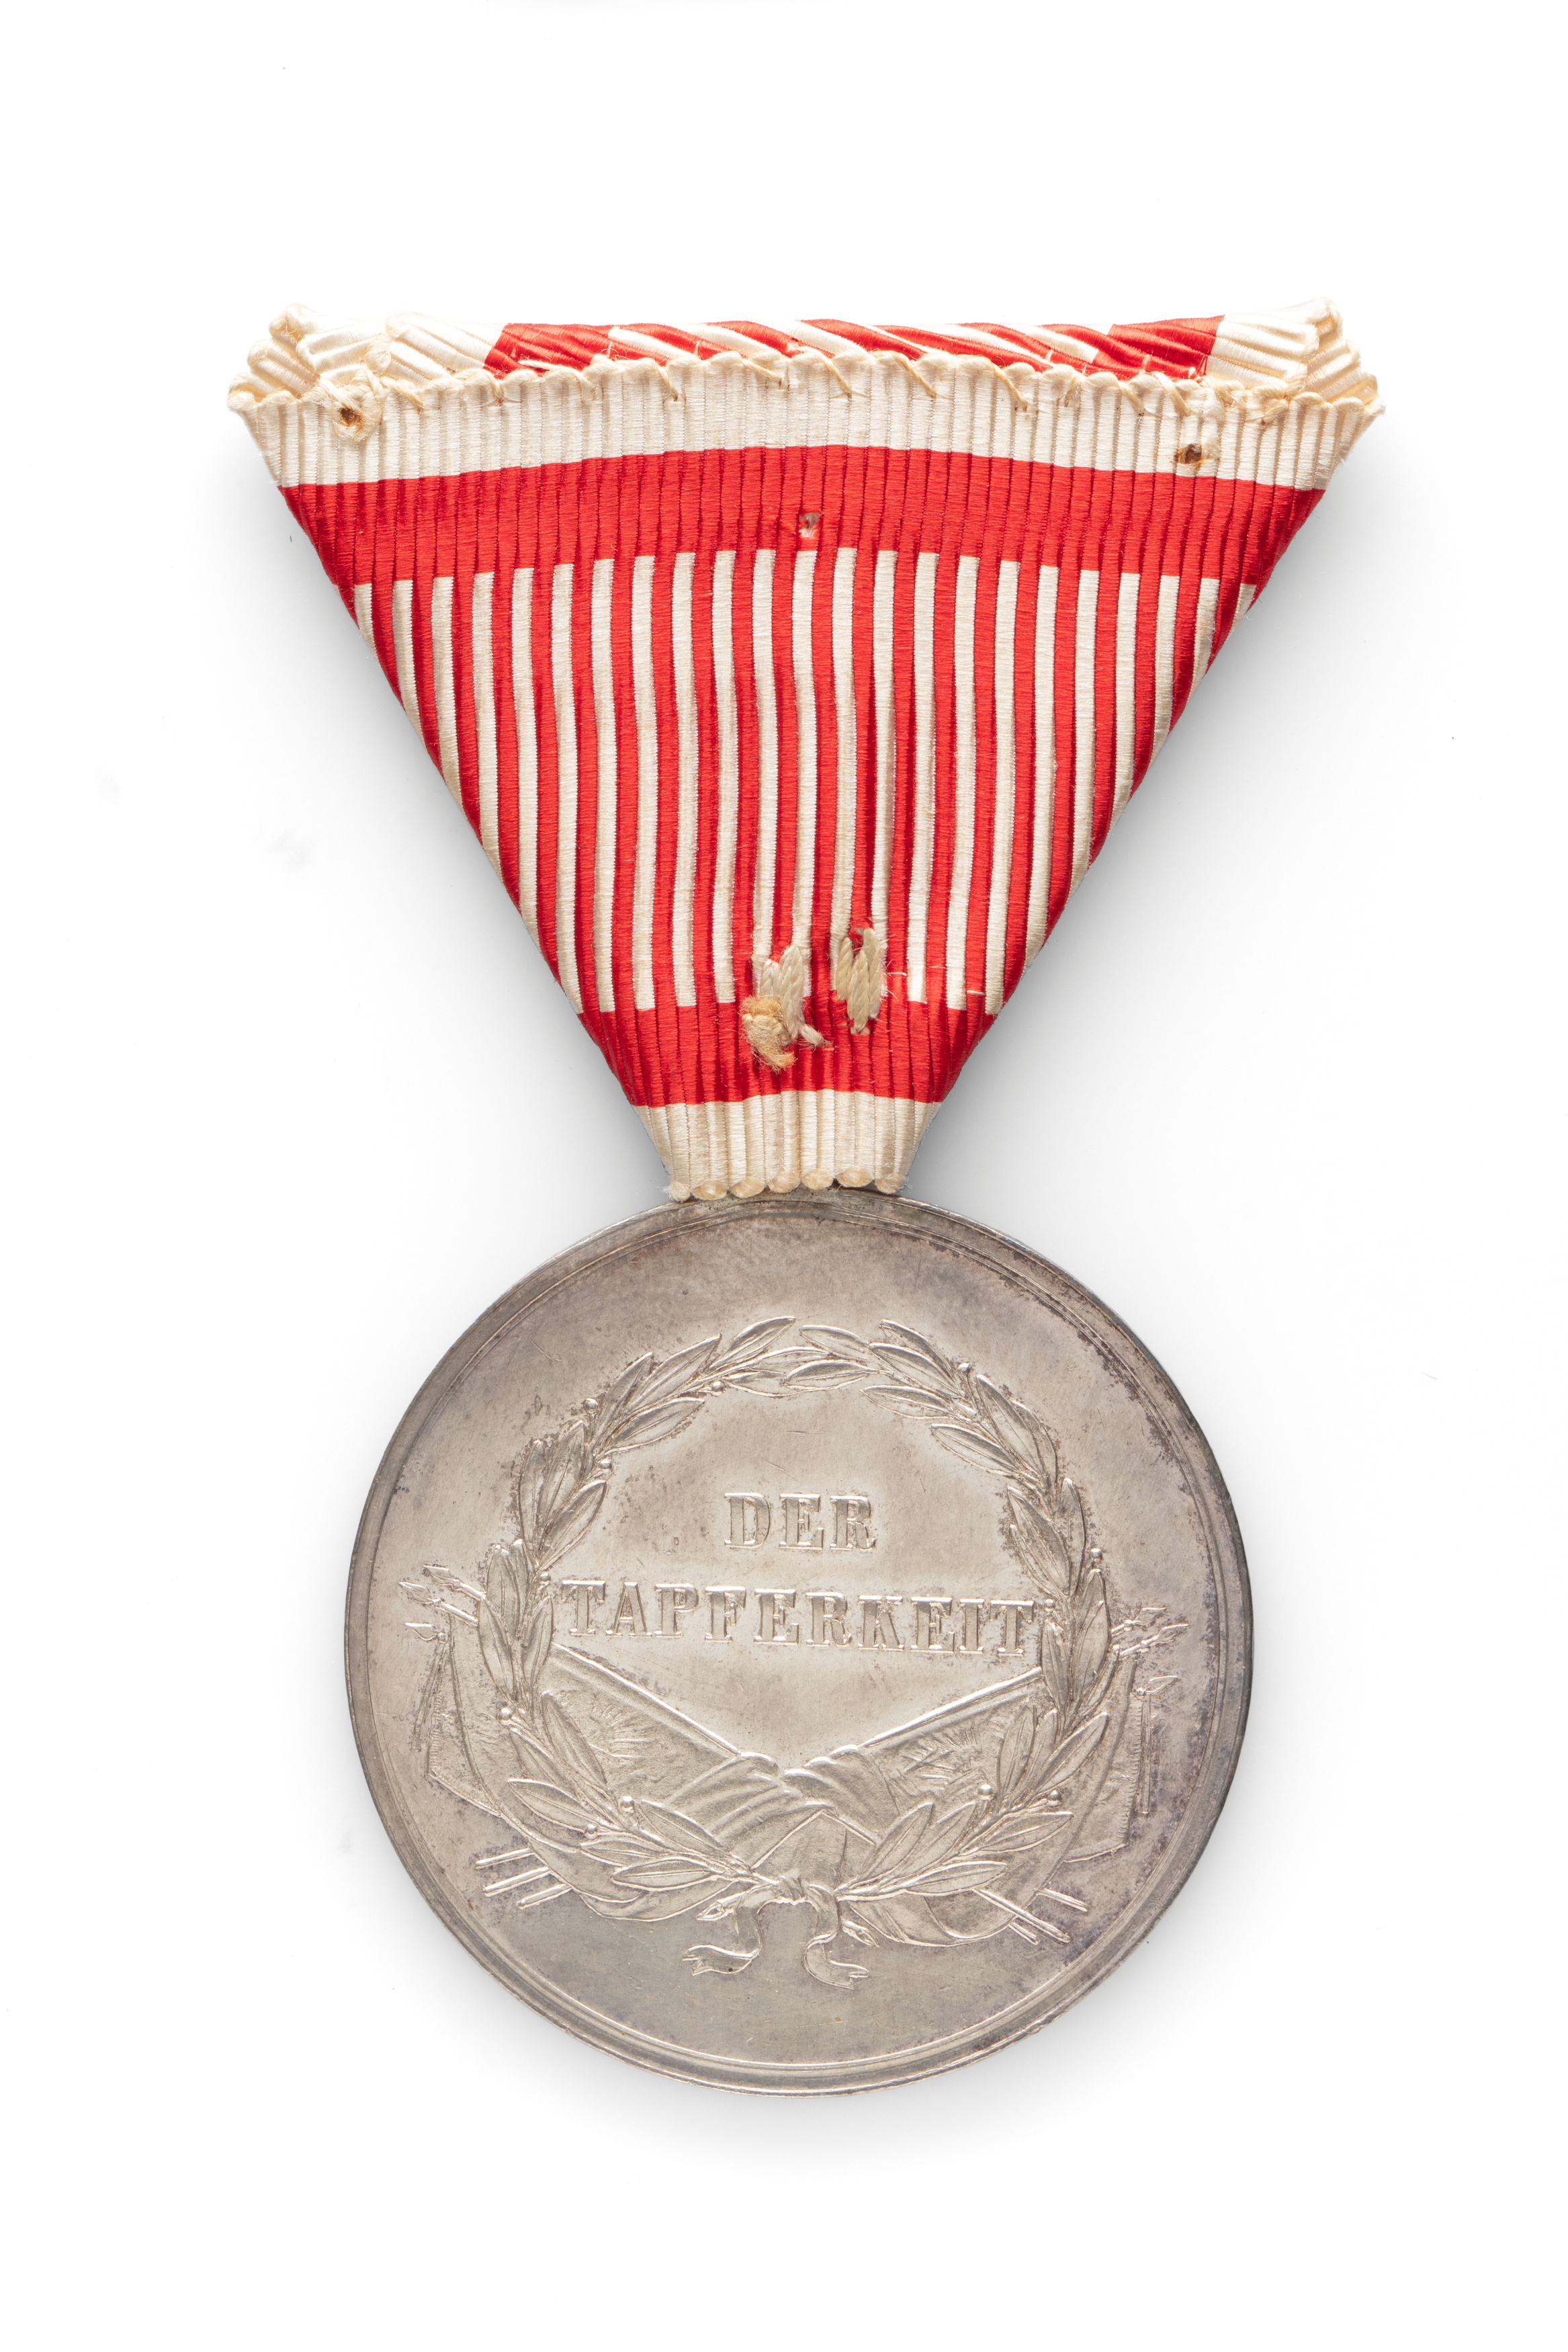 Austrian military medal awarded for valour